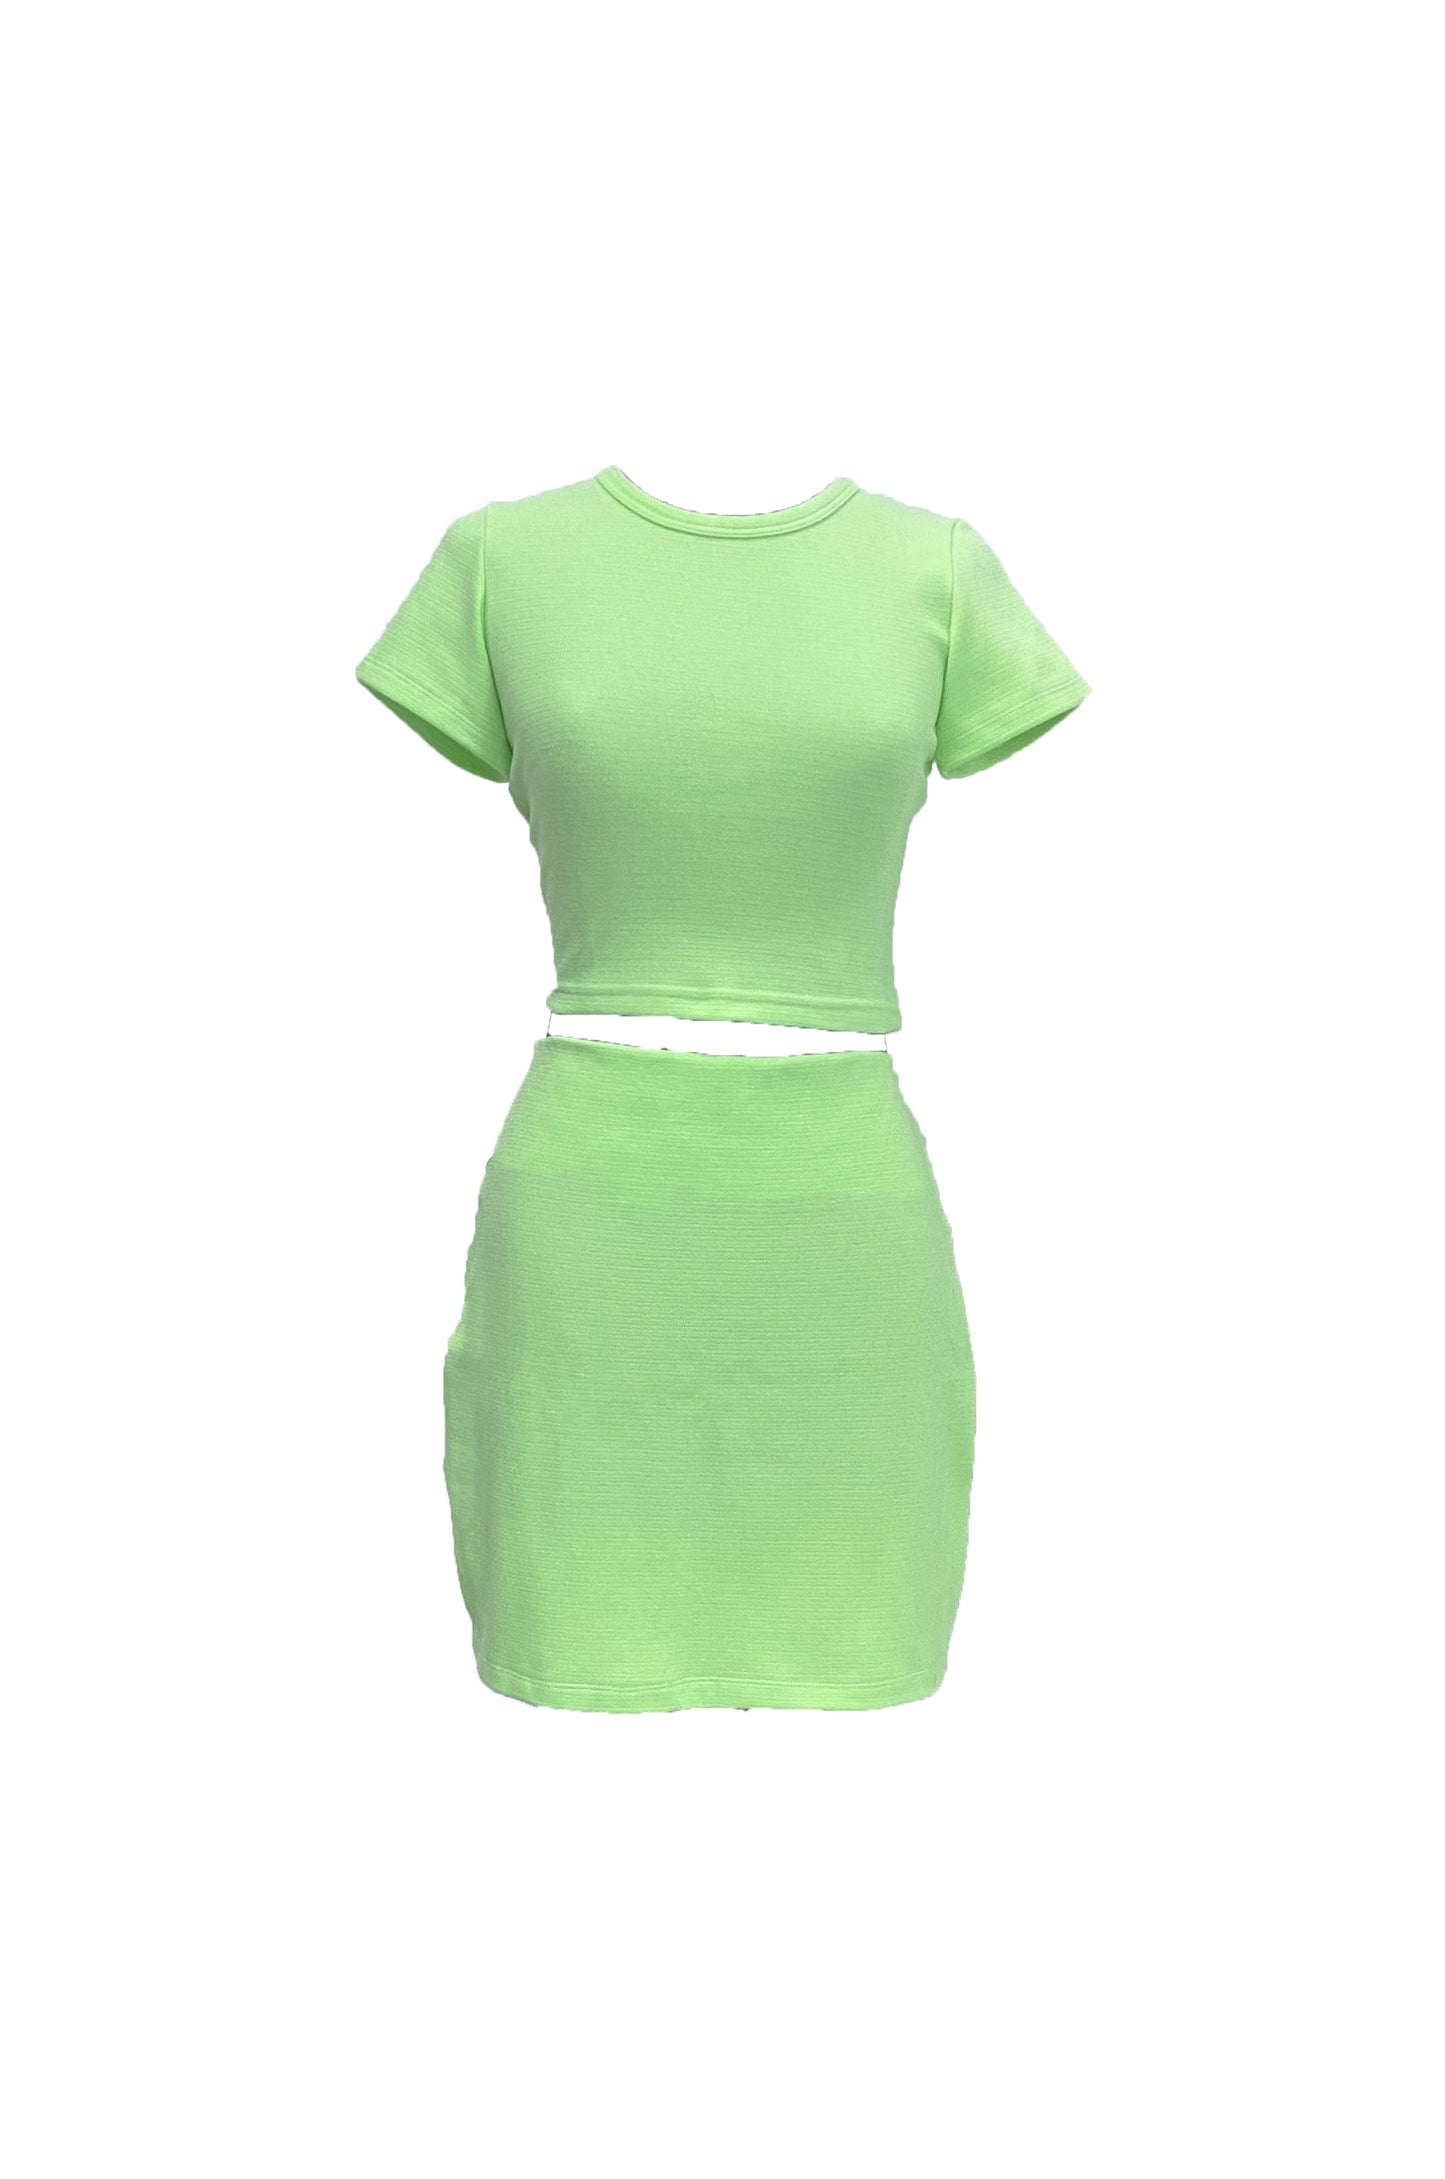 Camiseta Minimal - Versión verde